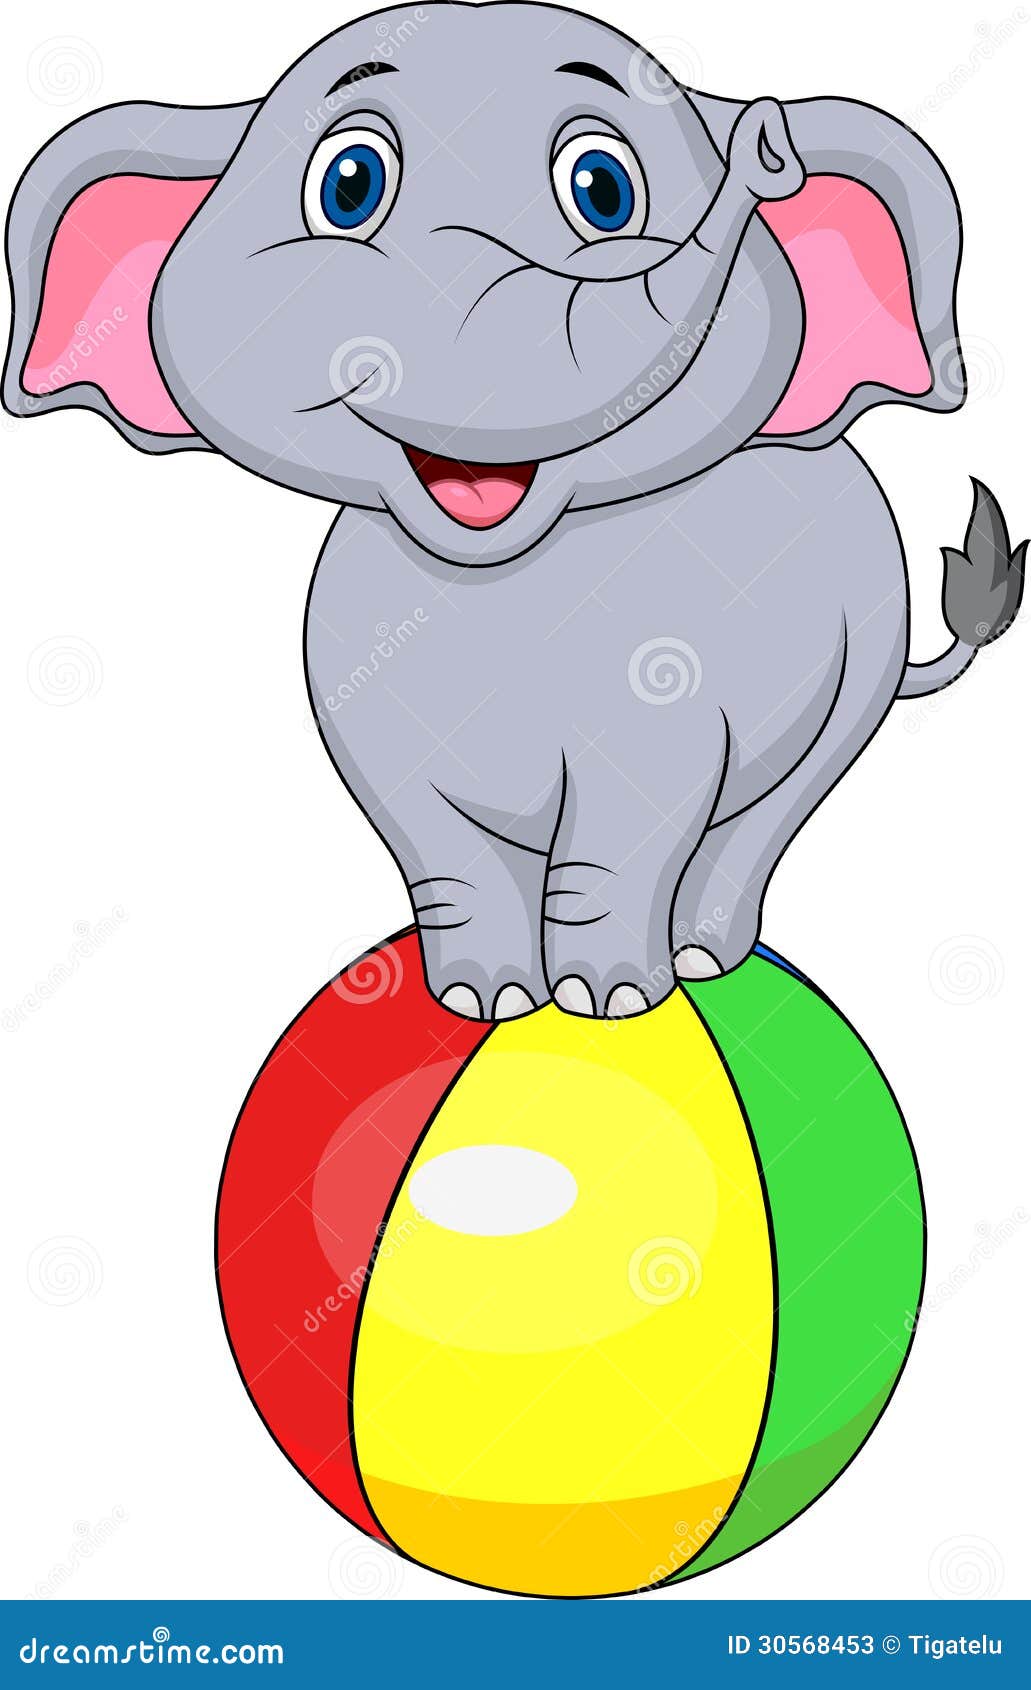 Cute Elephant Cartoon Standing on a Colorful Ball Stock Vector ...